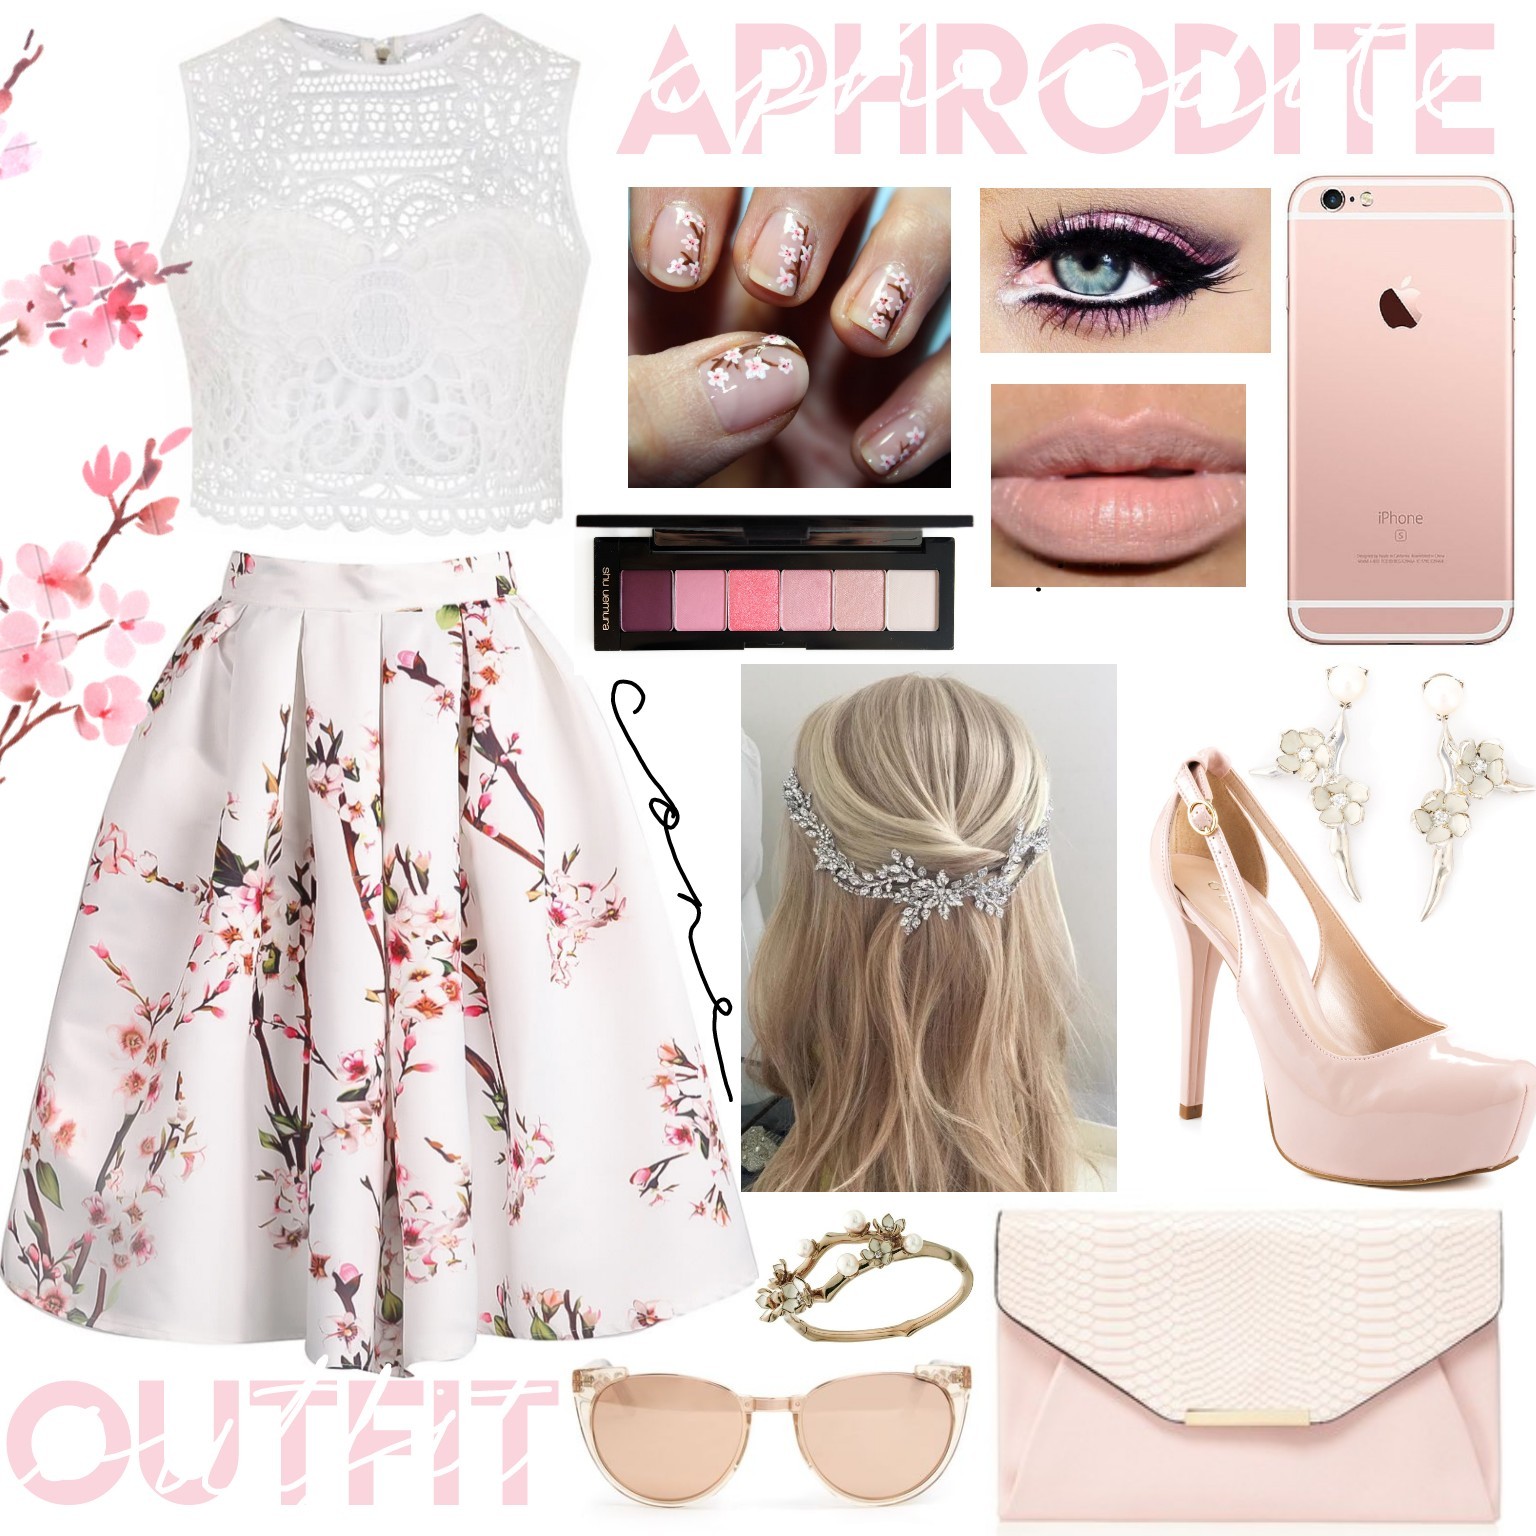 Aphrodite outfit! do you like it? 